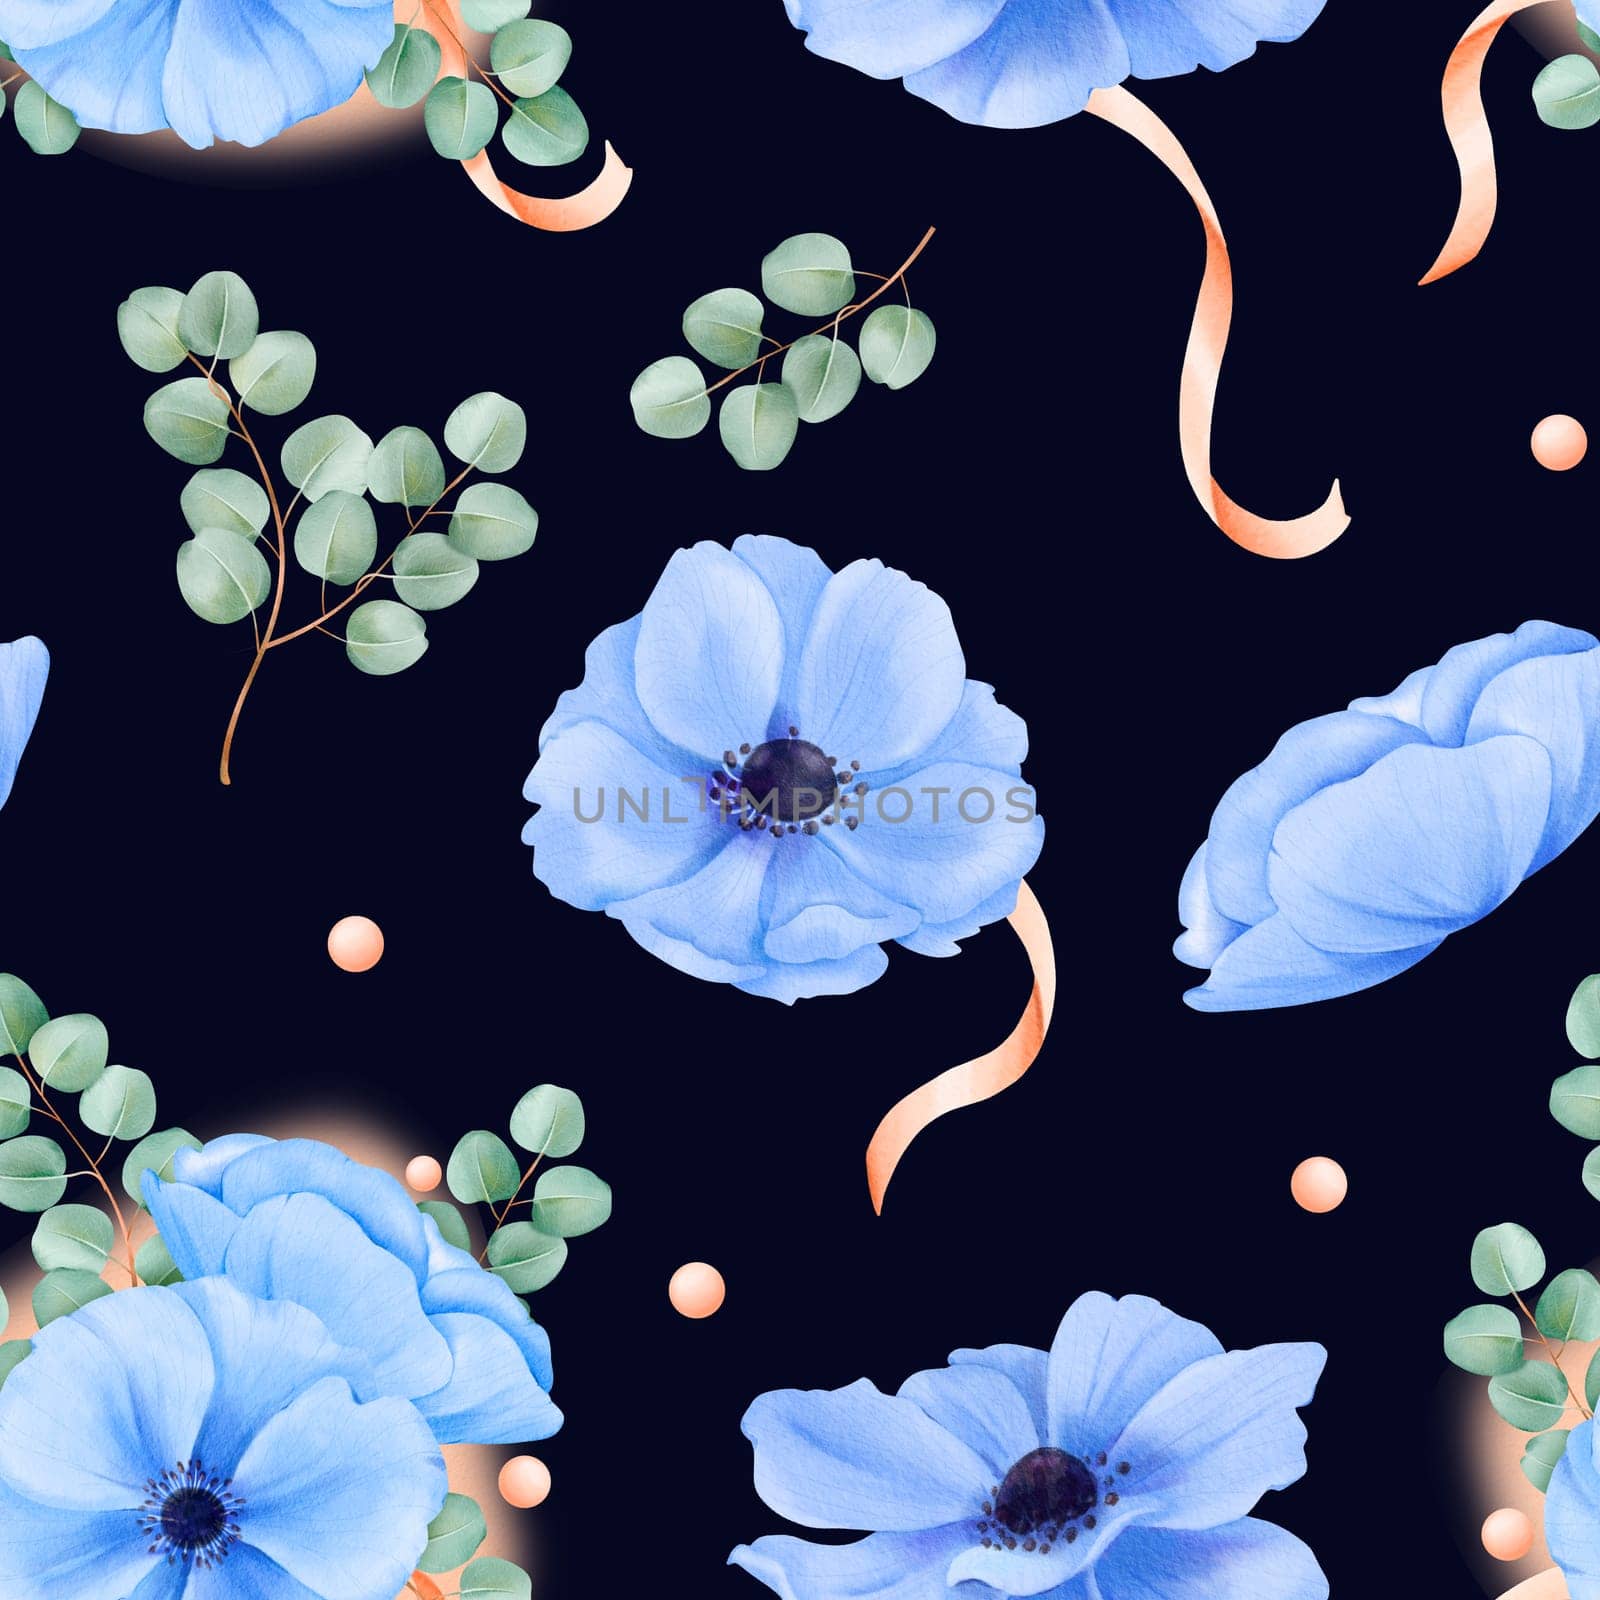 A seamless pattern watercolor floral elements set against a deep black backdrop. Elegant blue anemones, satin ribbons, sparkling rhinestones, and delicate eucalyptus leaves adorn the design by Art_Mari_Ka